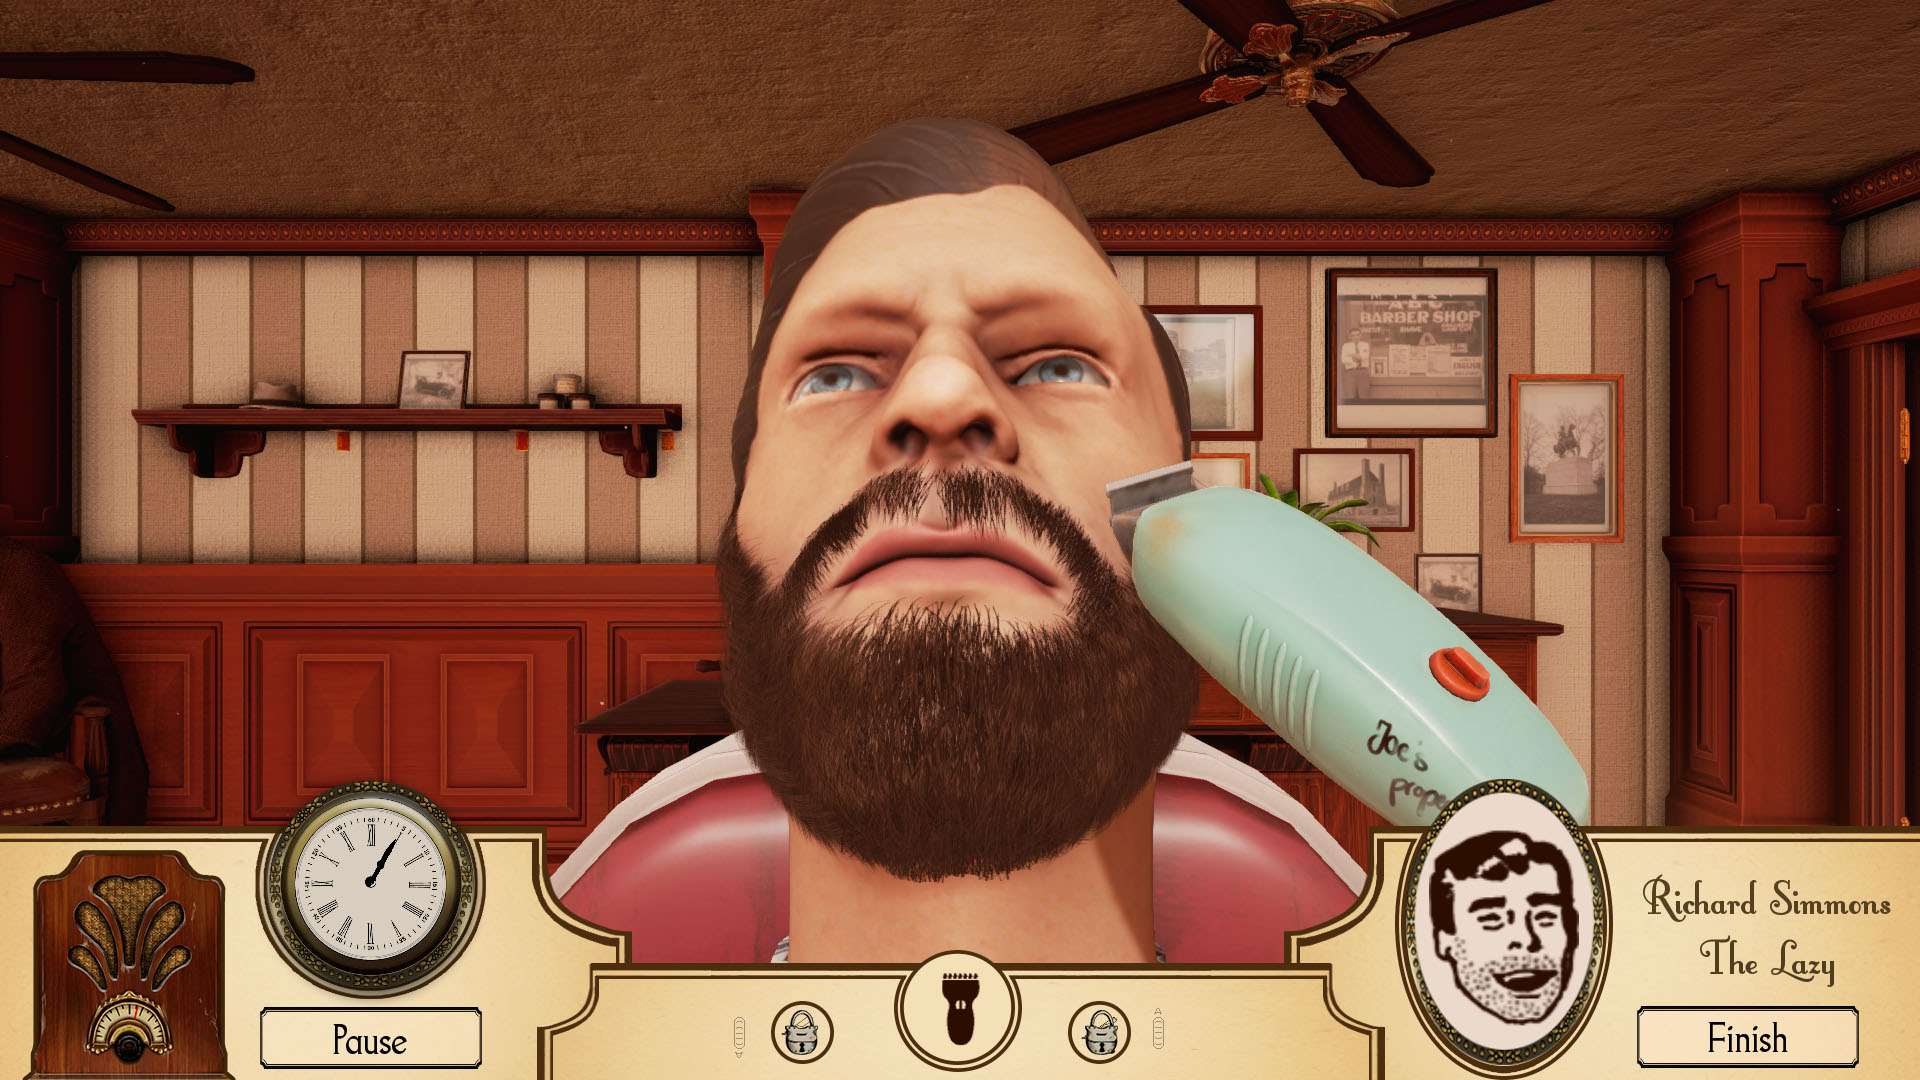 Shave Prince Beard Hair Salon — Barber Shop Game, by GameiMake